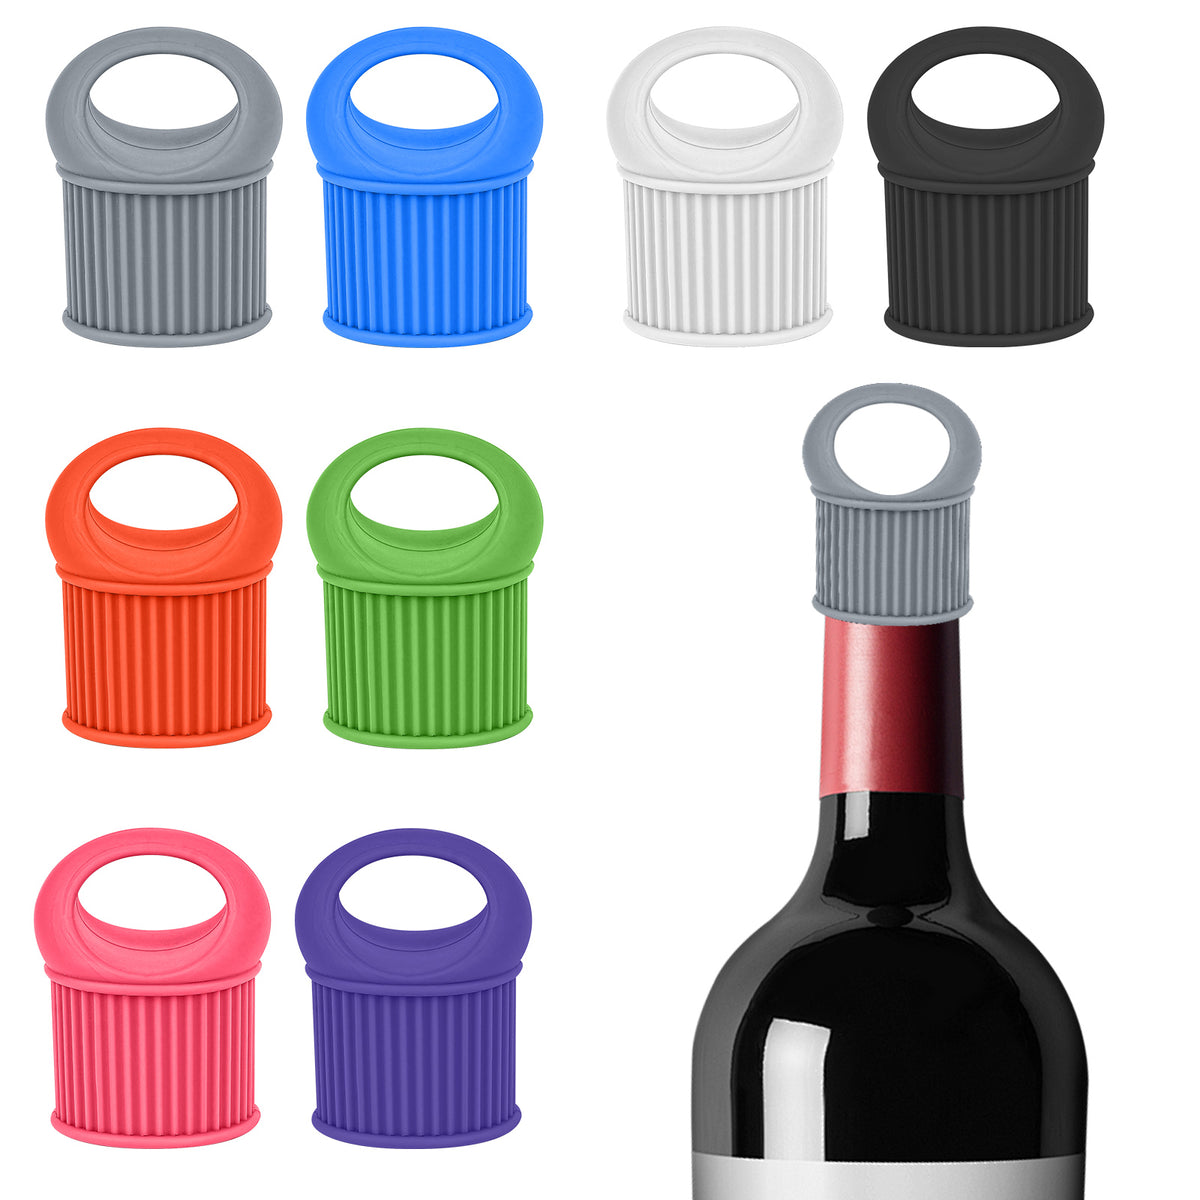 Adorila 8 Pack Silicone Wine Stopper, Reusable Wine Bottle Caps, Leakproof Beer Bottle Sealer Covers for Kitchen Bar Tools